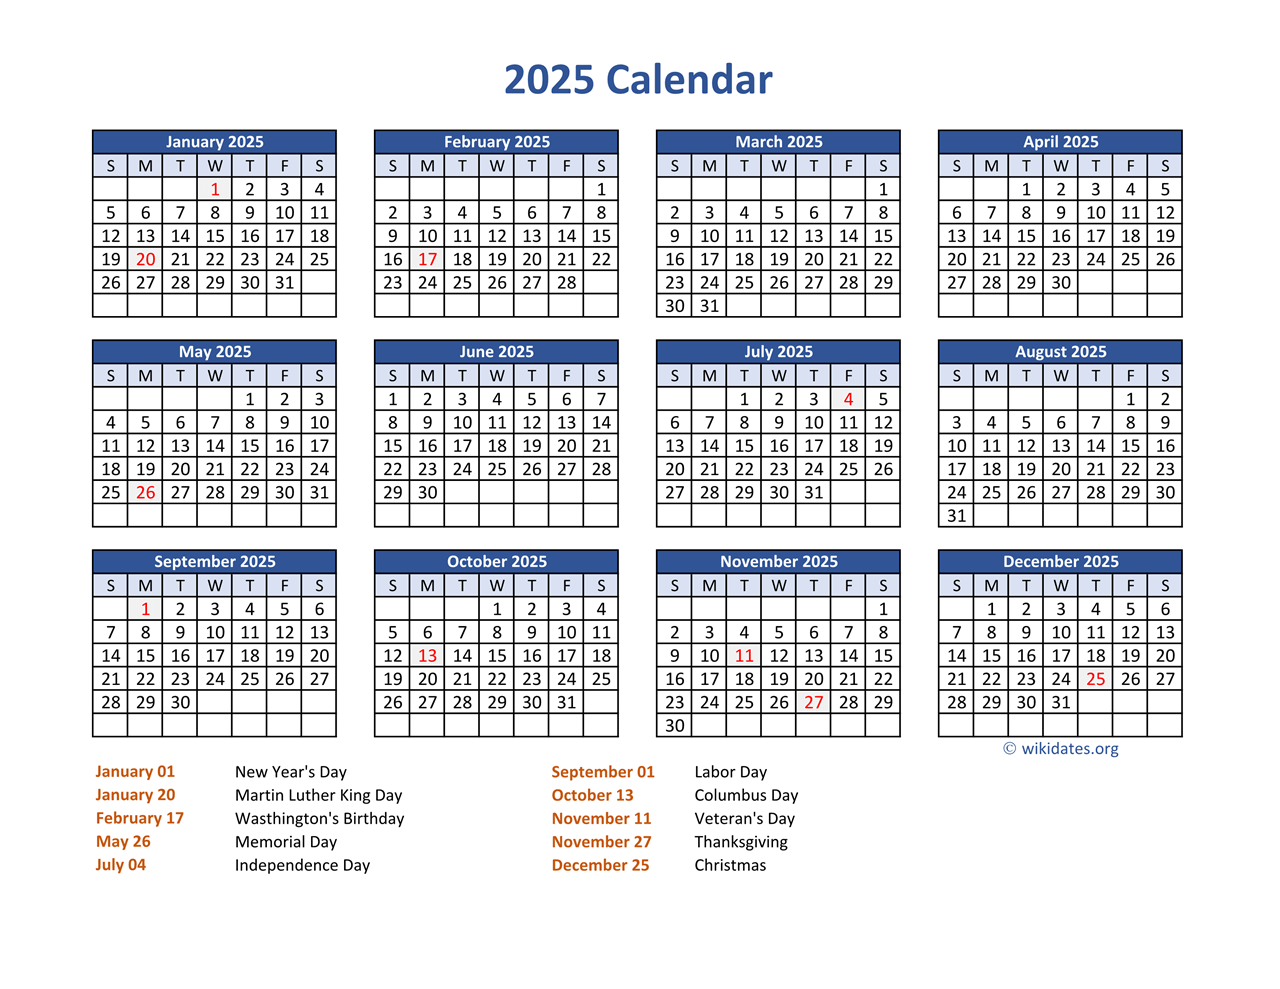 pdf-calendar-2025-with-federal-holidays-wikidates